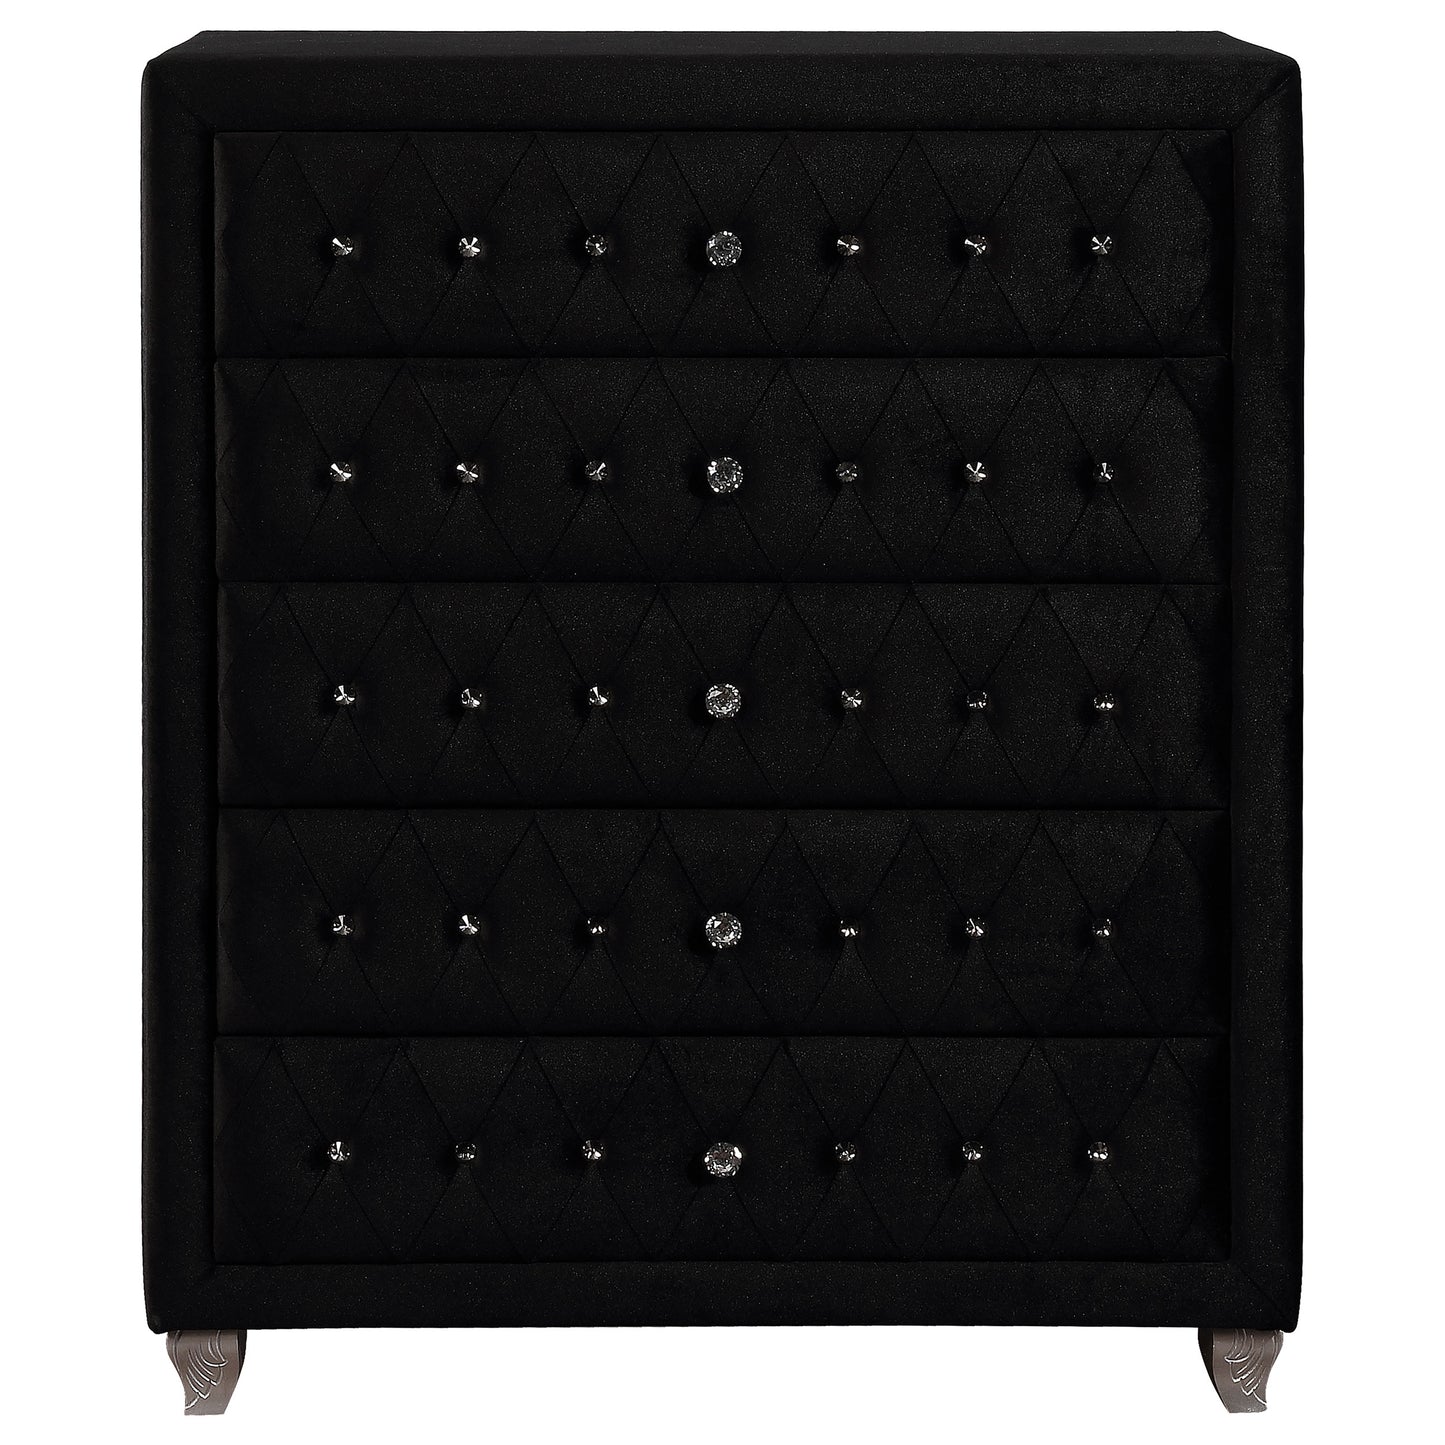 Deanna 5-drawer Bedroom Chest Black